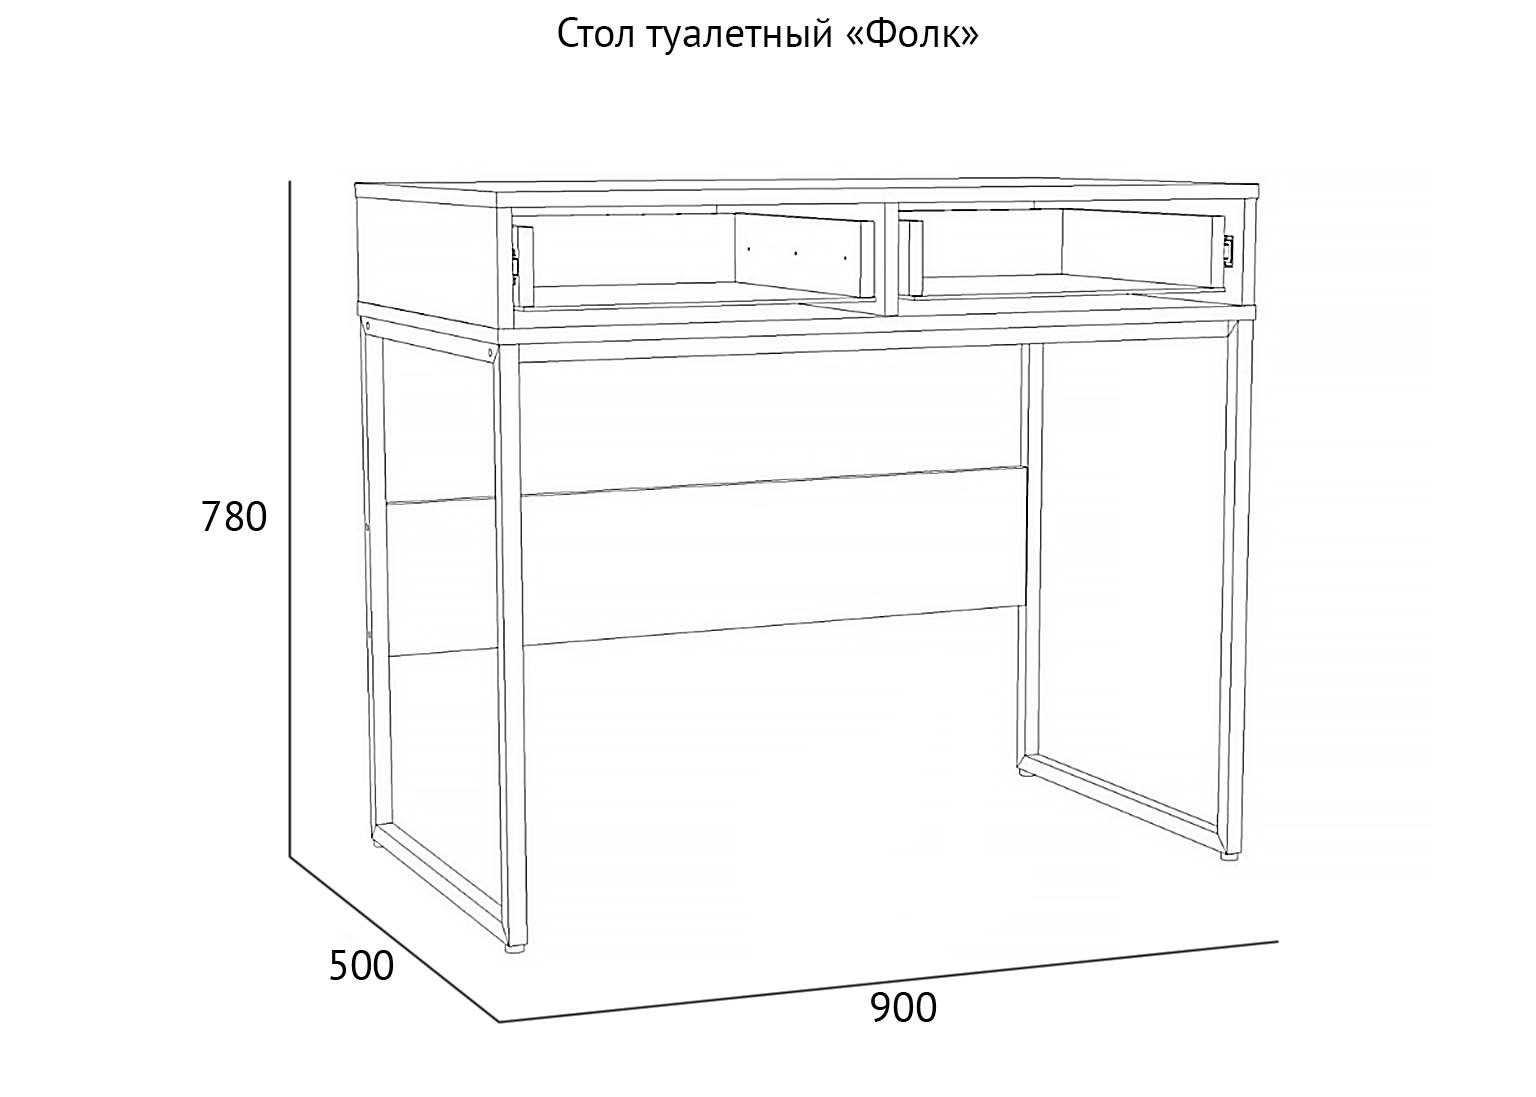 НМ 011.96 Стол туалетный Фолк схема Мебель Краснодар